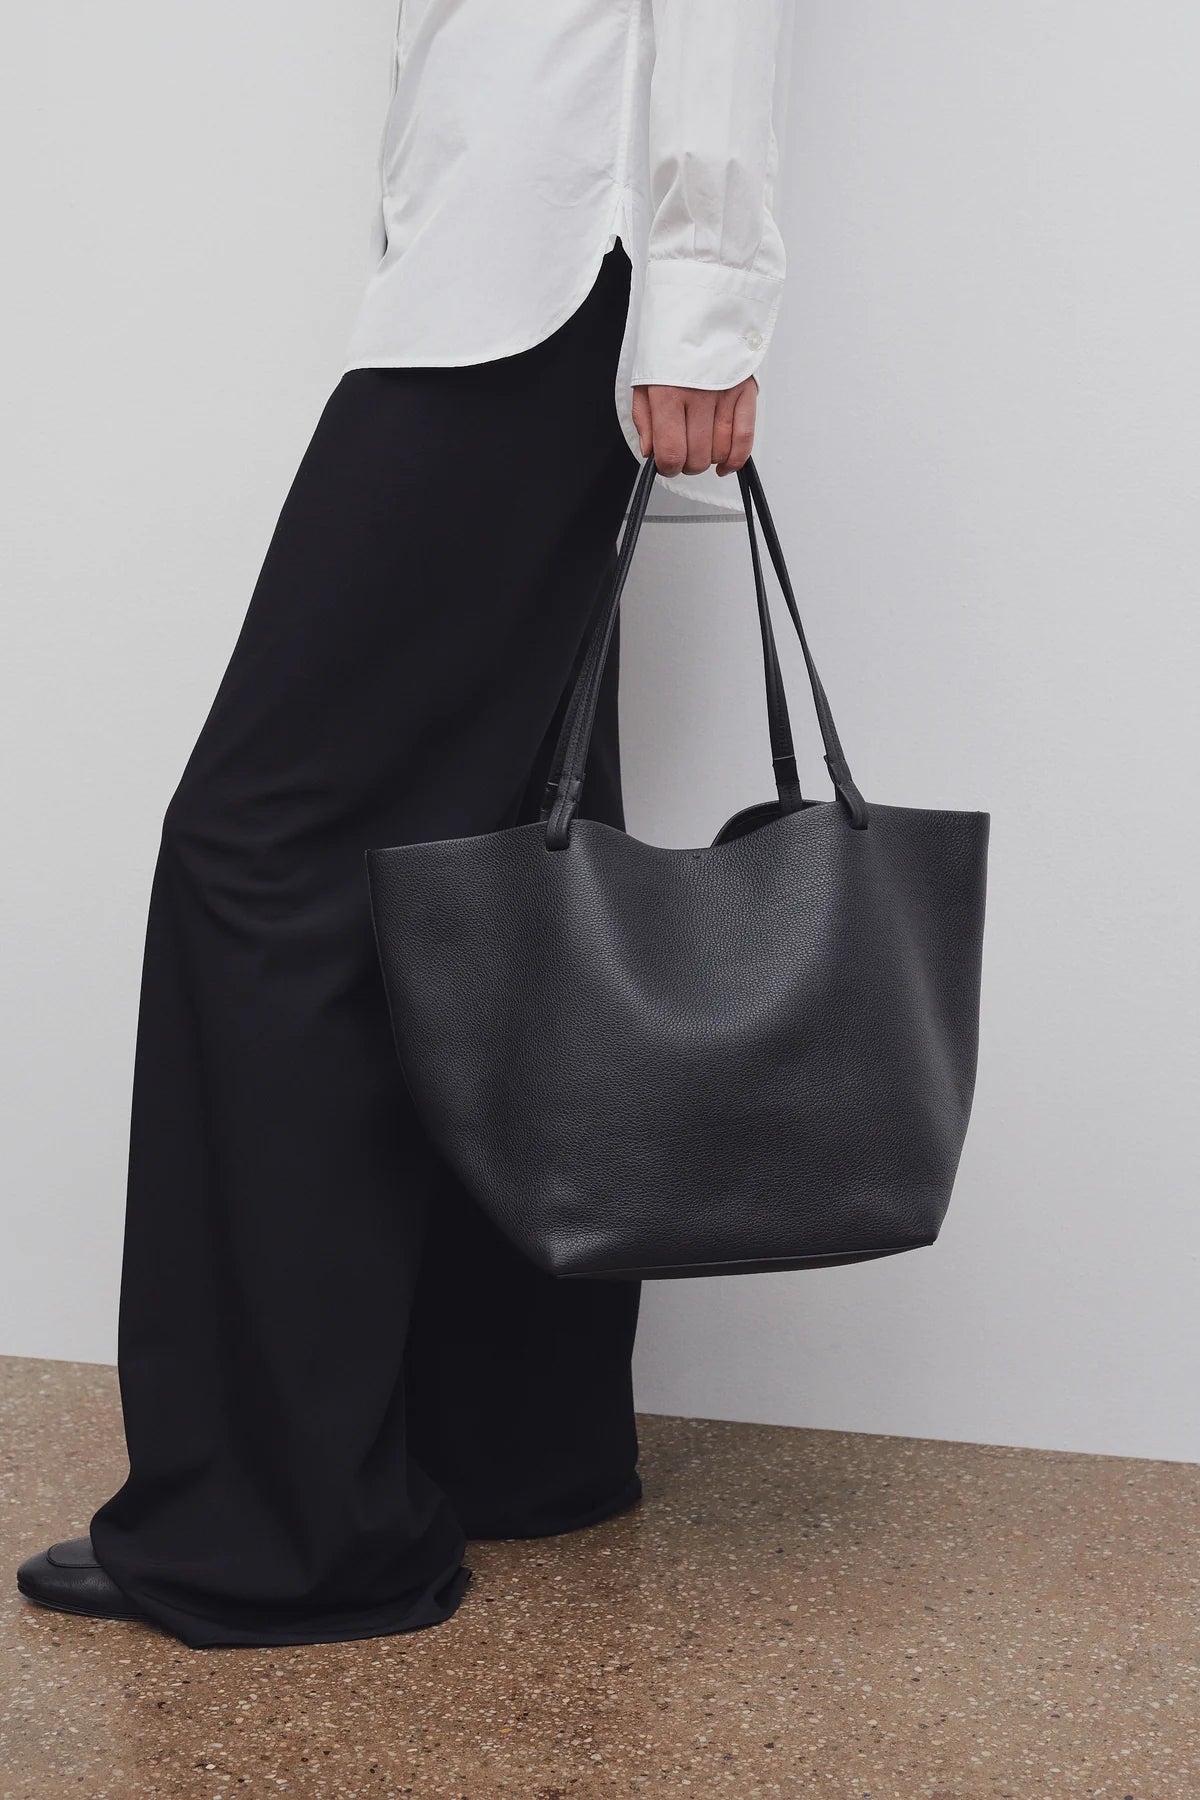 Park Tote Three Bag in Black Leather - The Row - Ileana Makri store